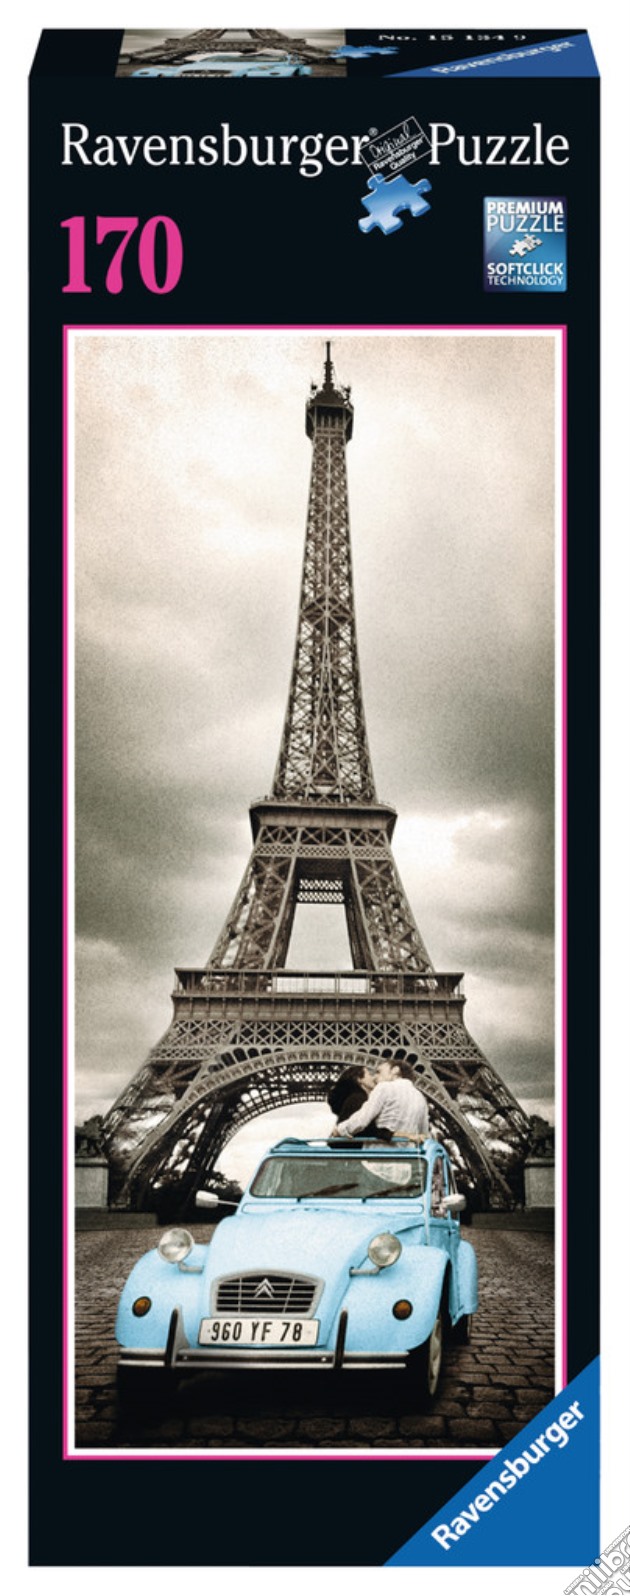 Puzzle Panorama Verticale - Paris Romance puzzle di RAVENSBURGER